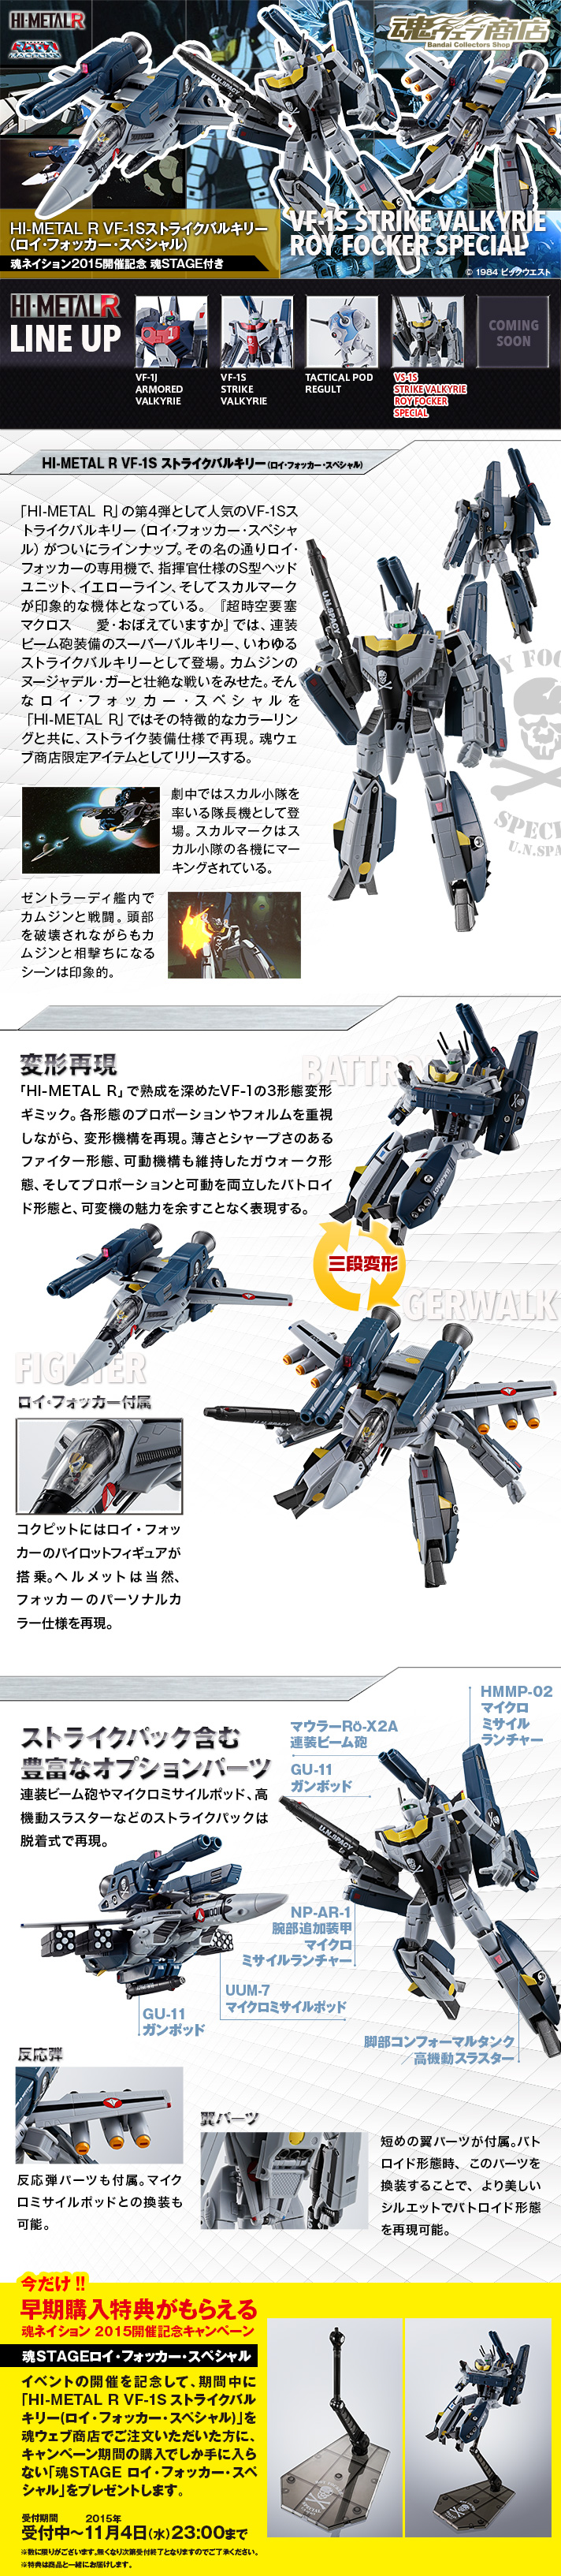 HI-METAL R VF-1S ストライクバルキリー(ロイ・フォッカー・スペシャル